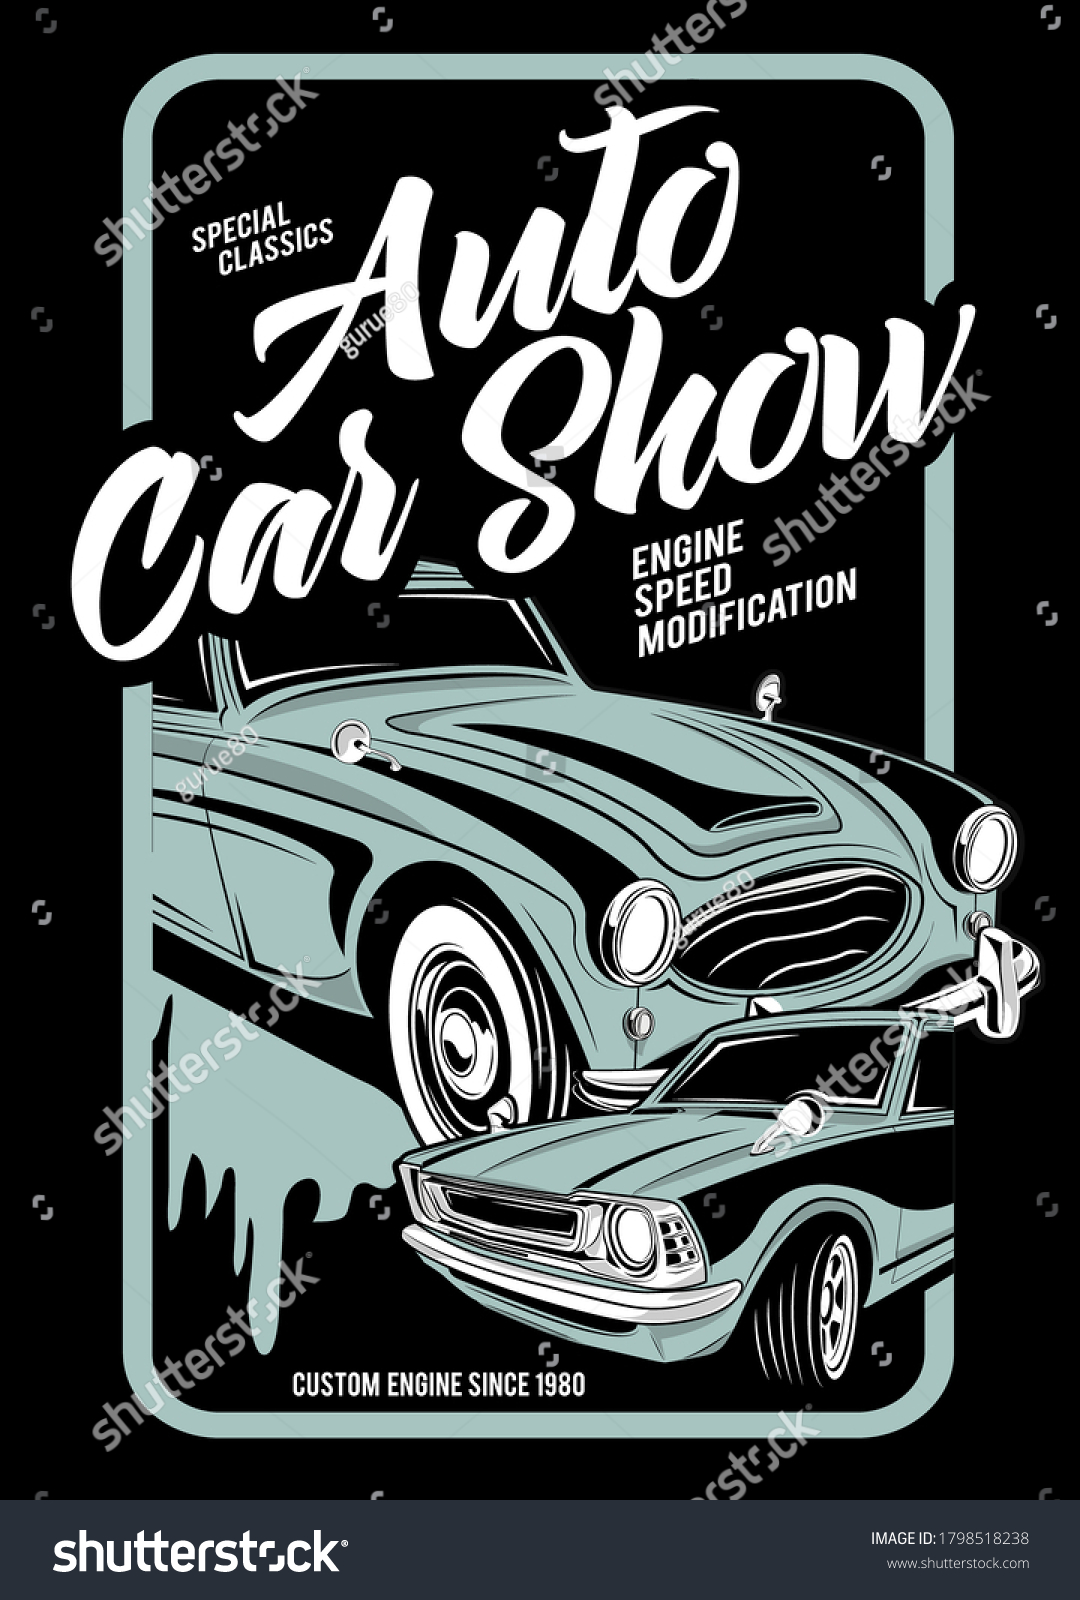 SVG of auto car show, super classic car illustration svg